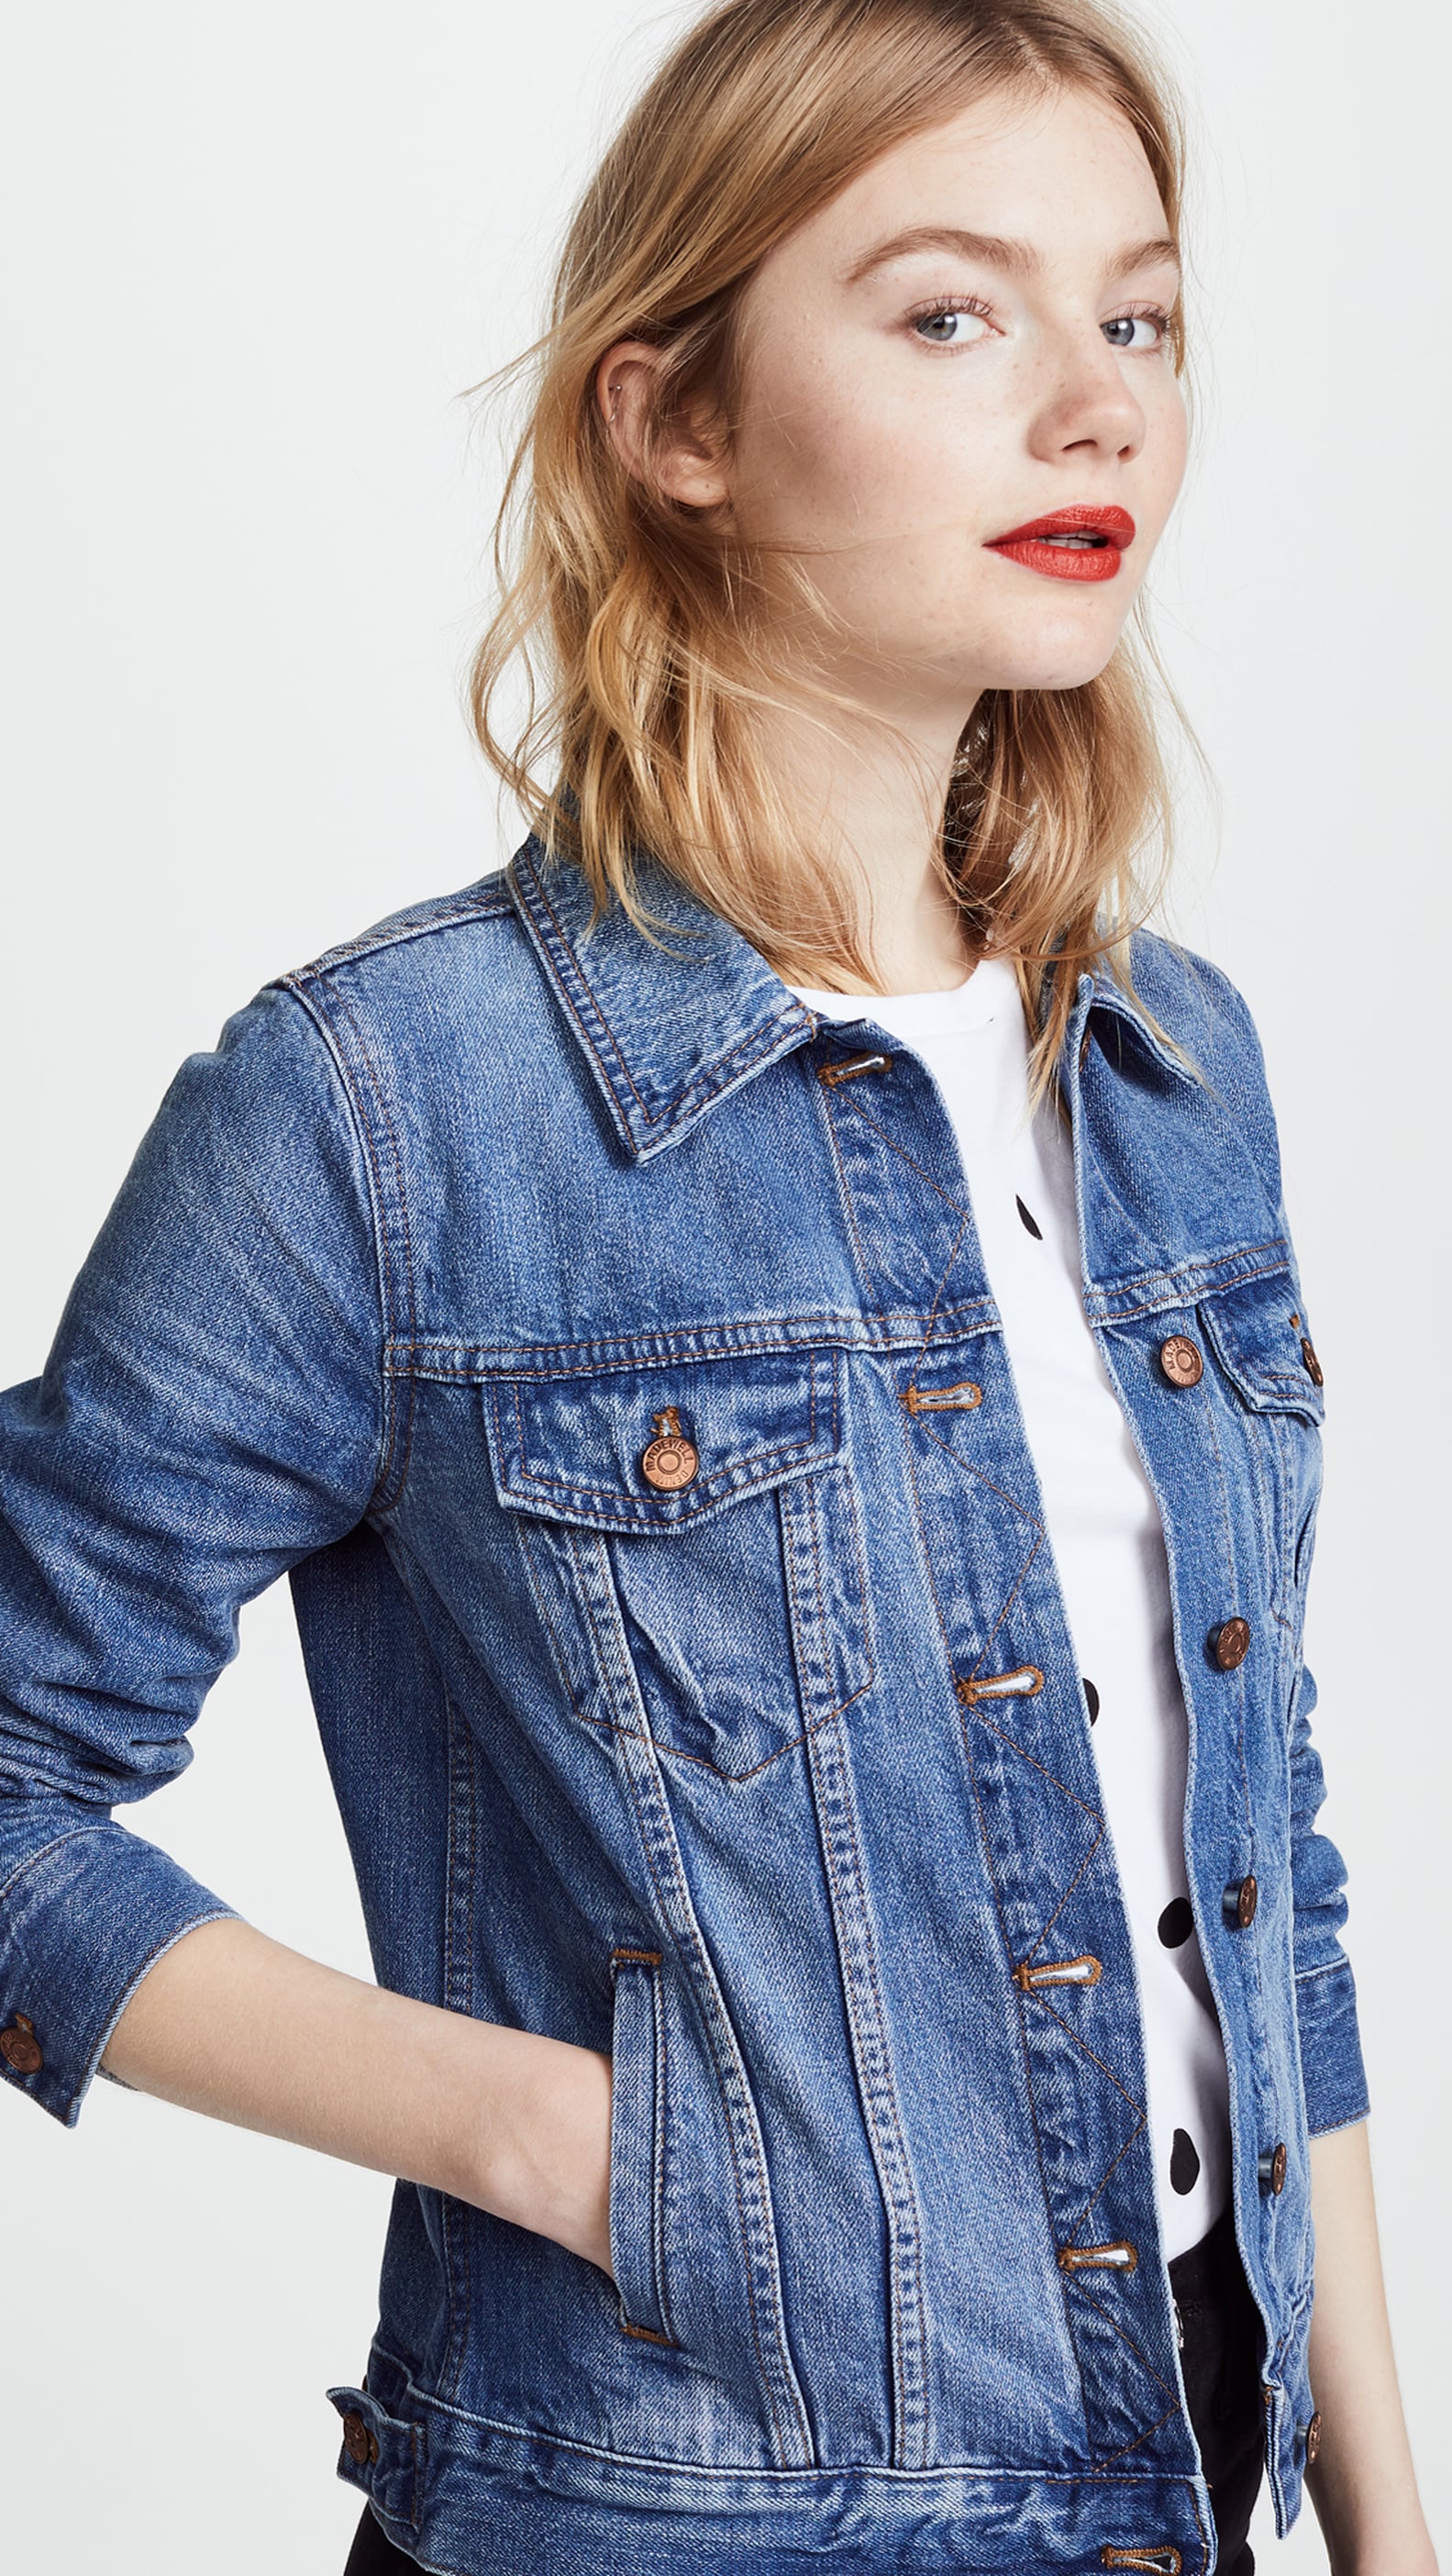 Meghan Markle's Madewell Denim Jacket Looks Effortless | POPSUGAR Fashion